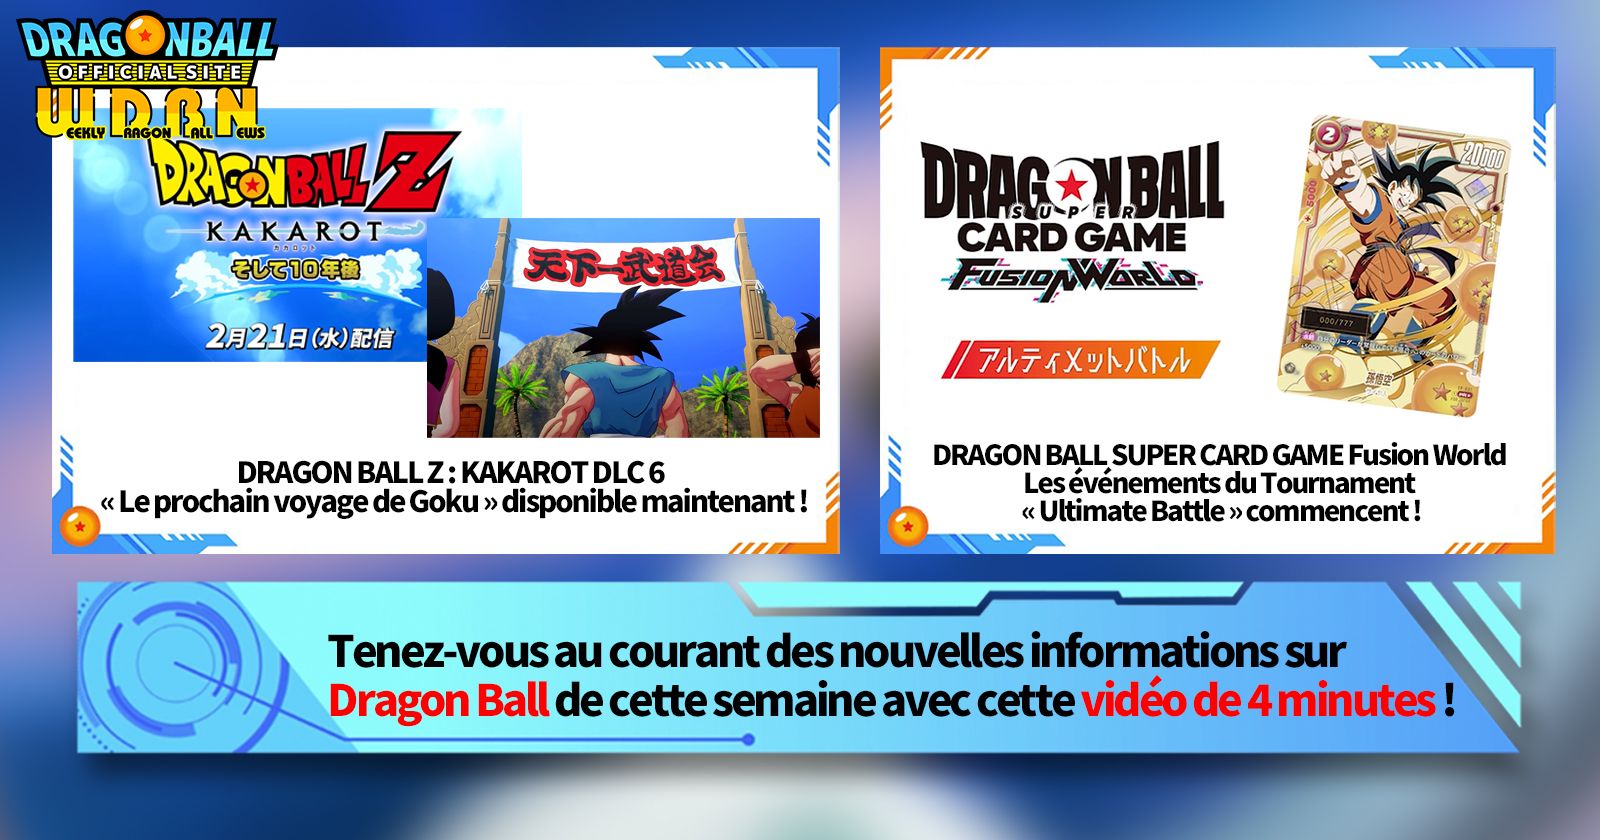 [26 février] Diffusion Nouvelles hebdomadaires Dragon Ball !